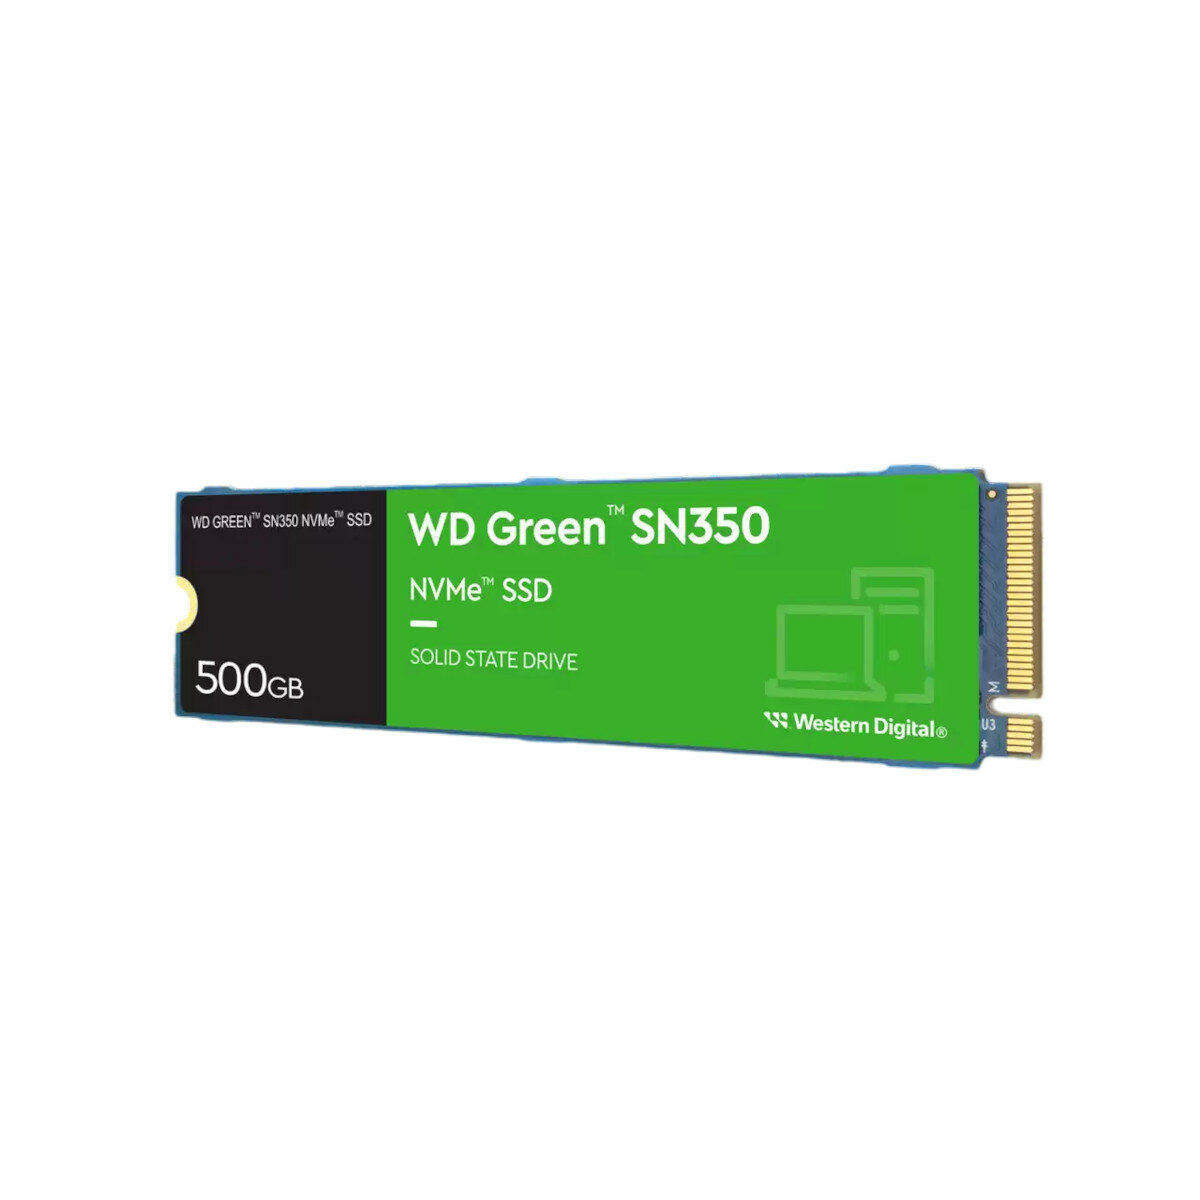 Dysk SSD WD Green SN350 500GB widok od frontu pod skosem